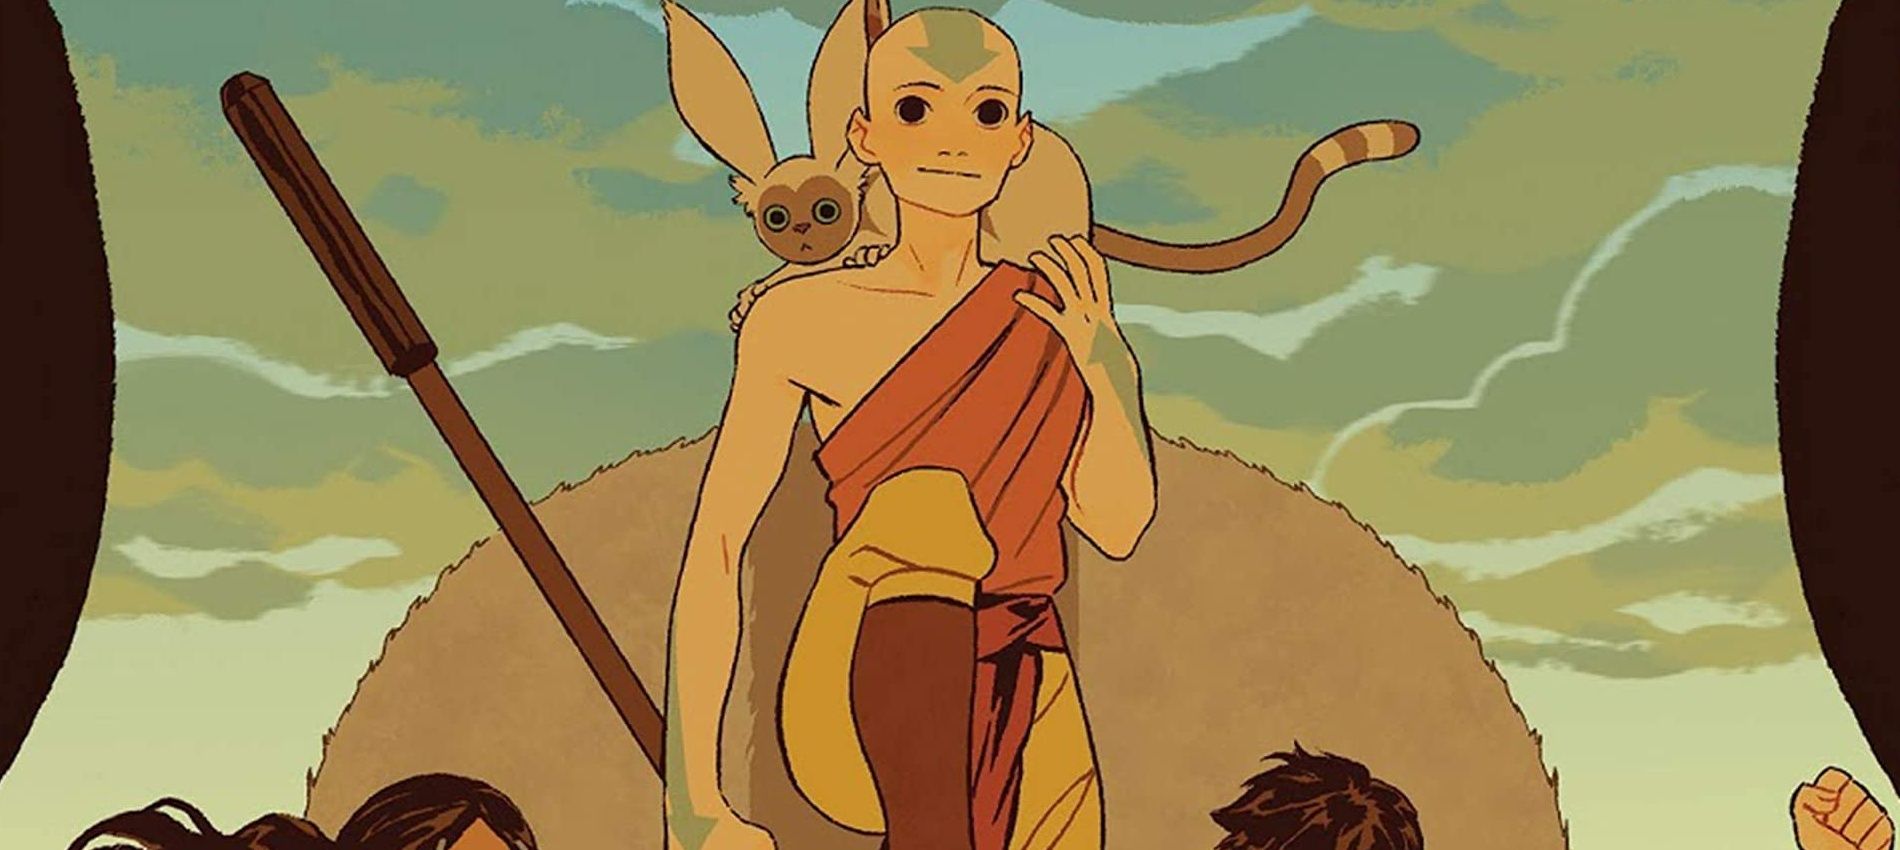 Avatar The Last Airbender 10 Best Franchise Comics